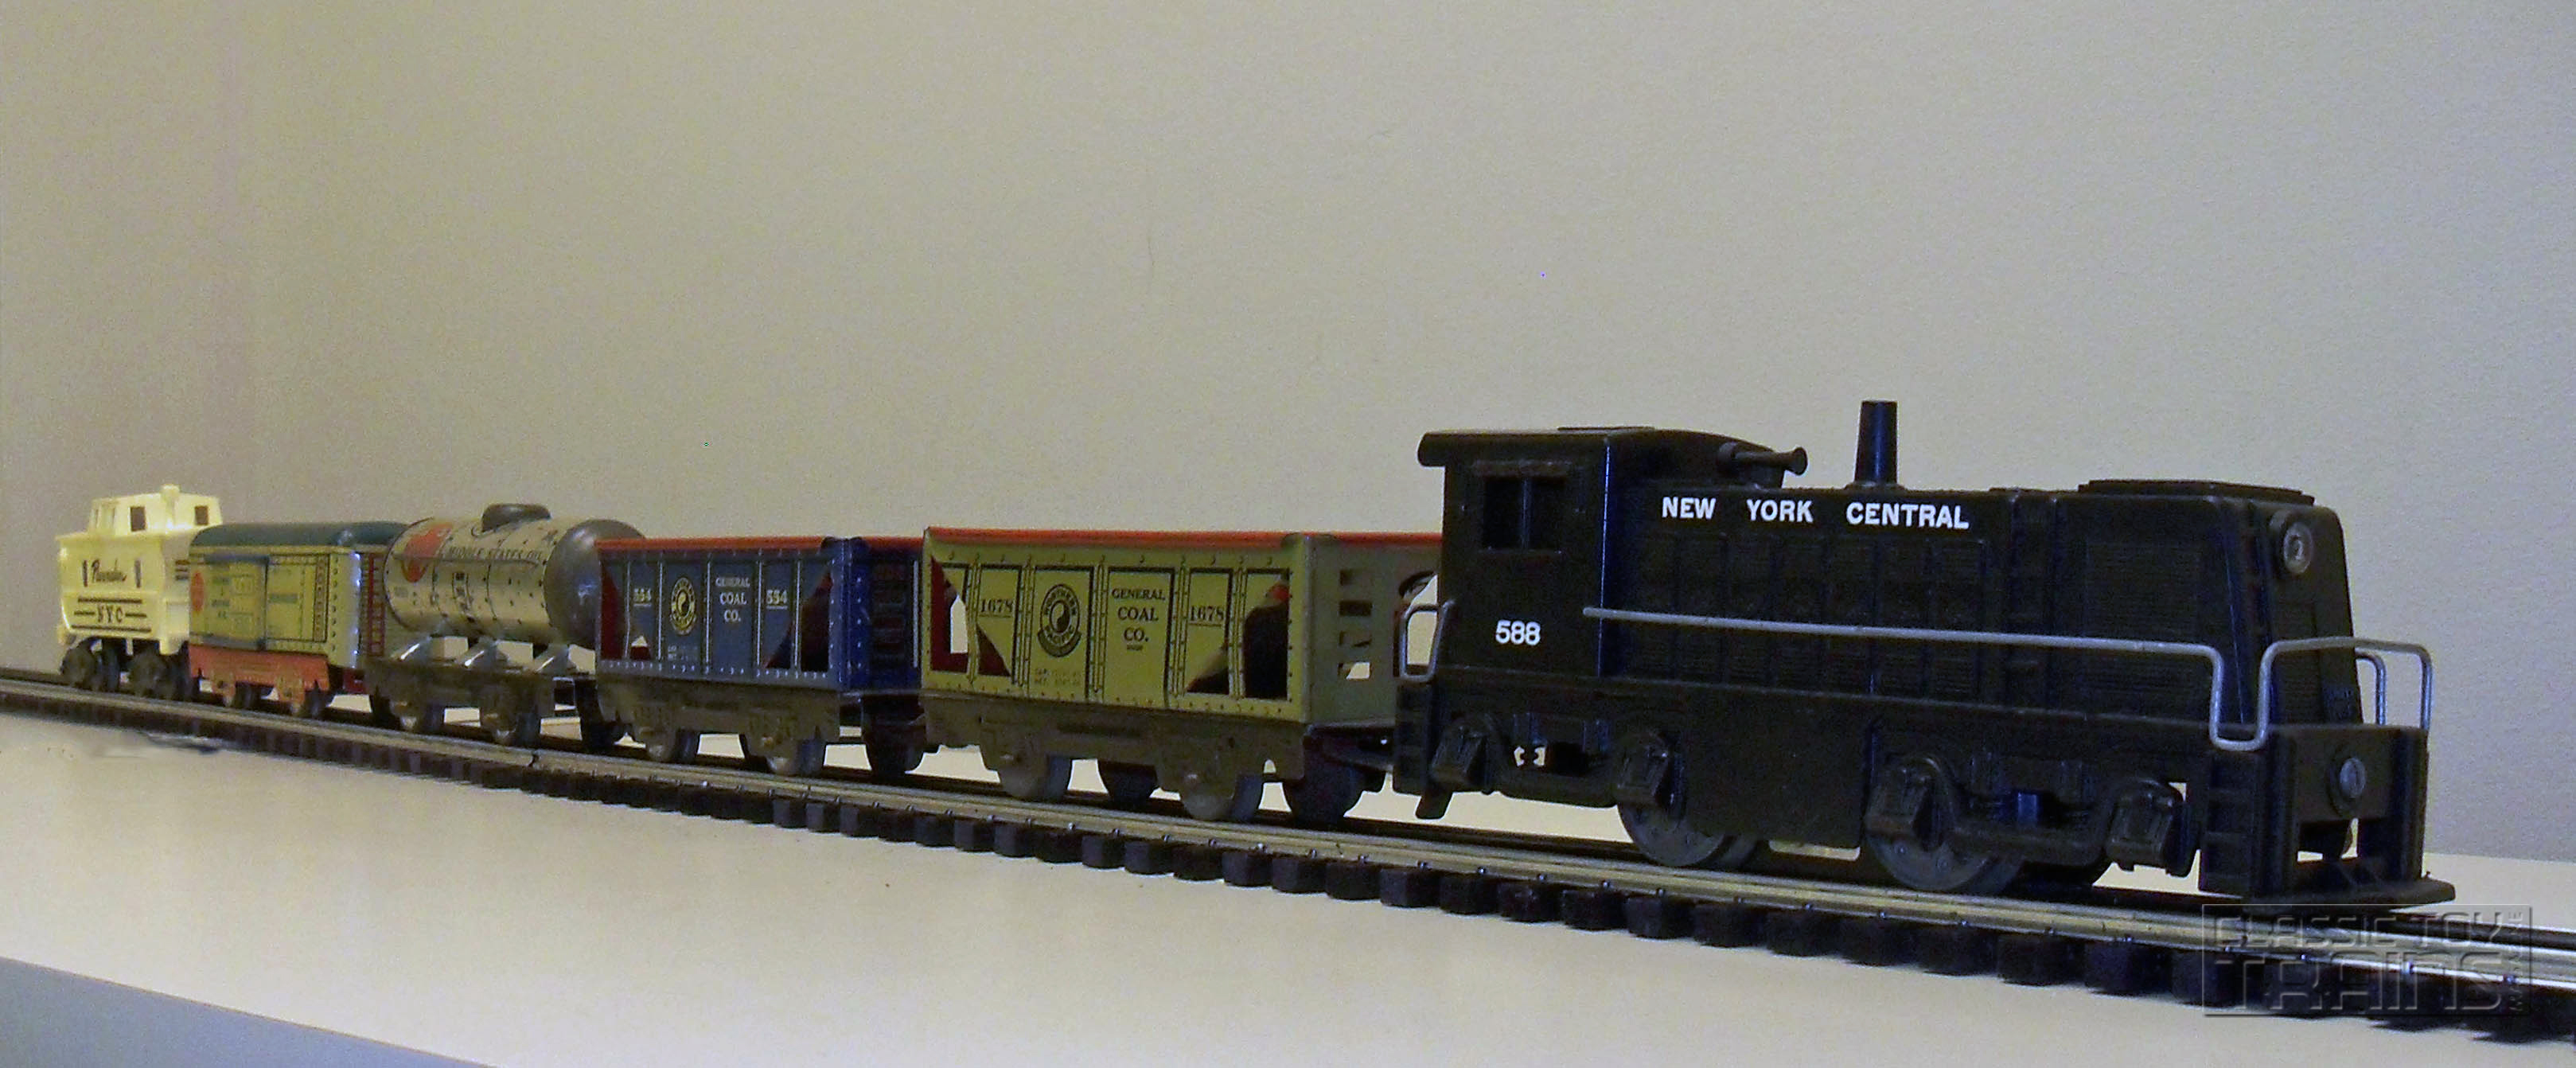 Marx Toys Trains 4